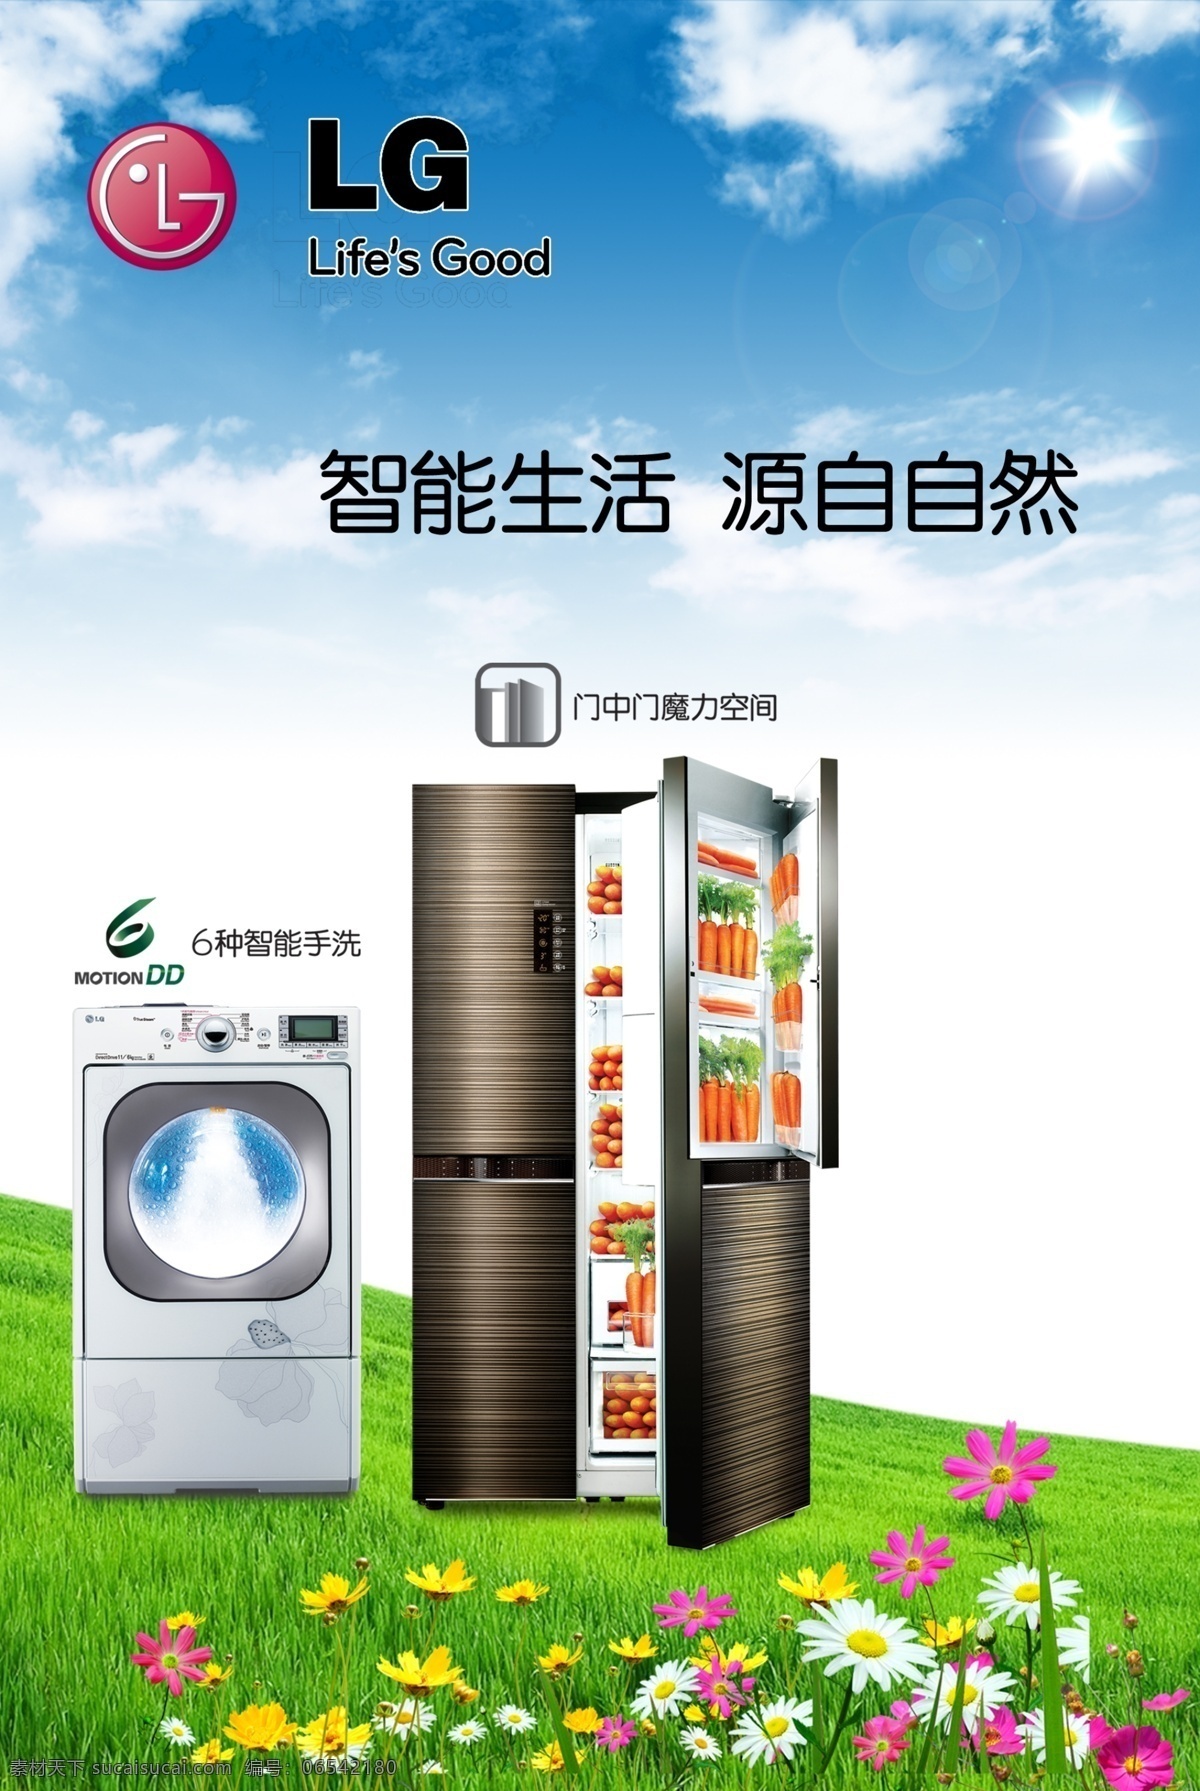 lg海报 lg lg标志 标志 lg洗衣机 lg冰箱 冰箱 洗衣机 花 草地 风景 广告设计模板 源文件